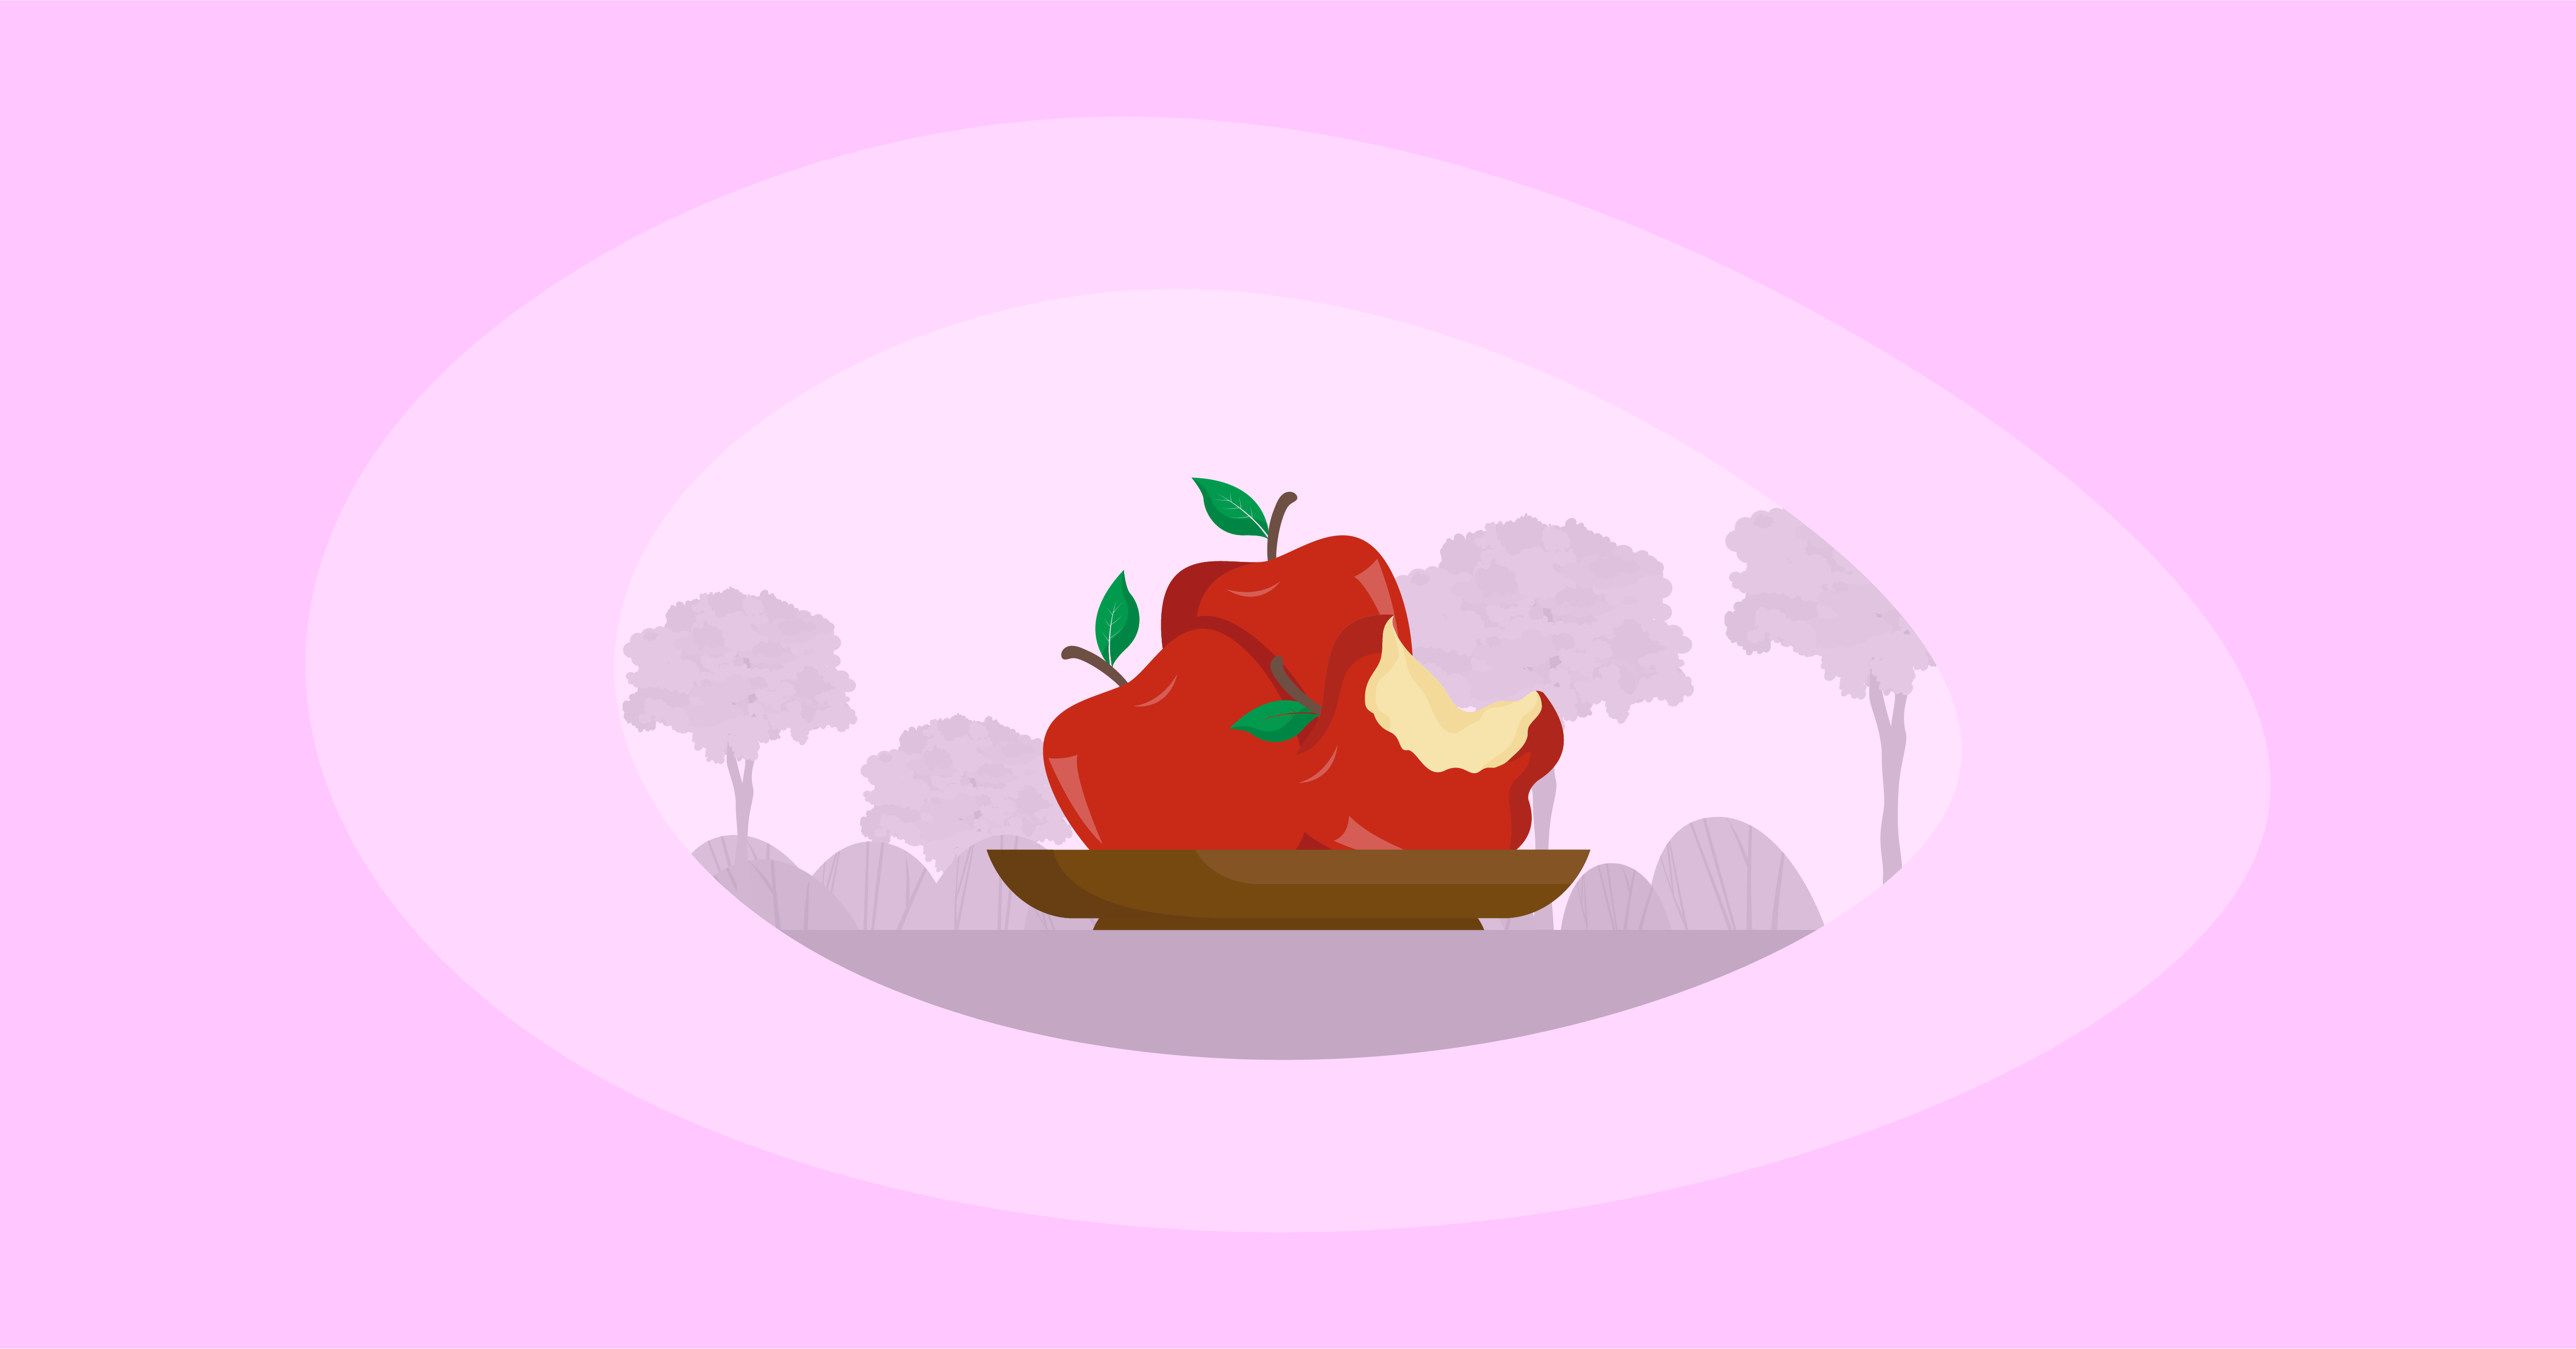 Illustration of apples in a wooden platter